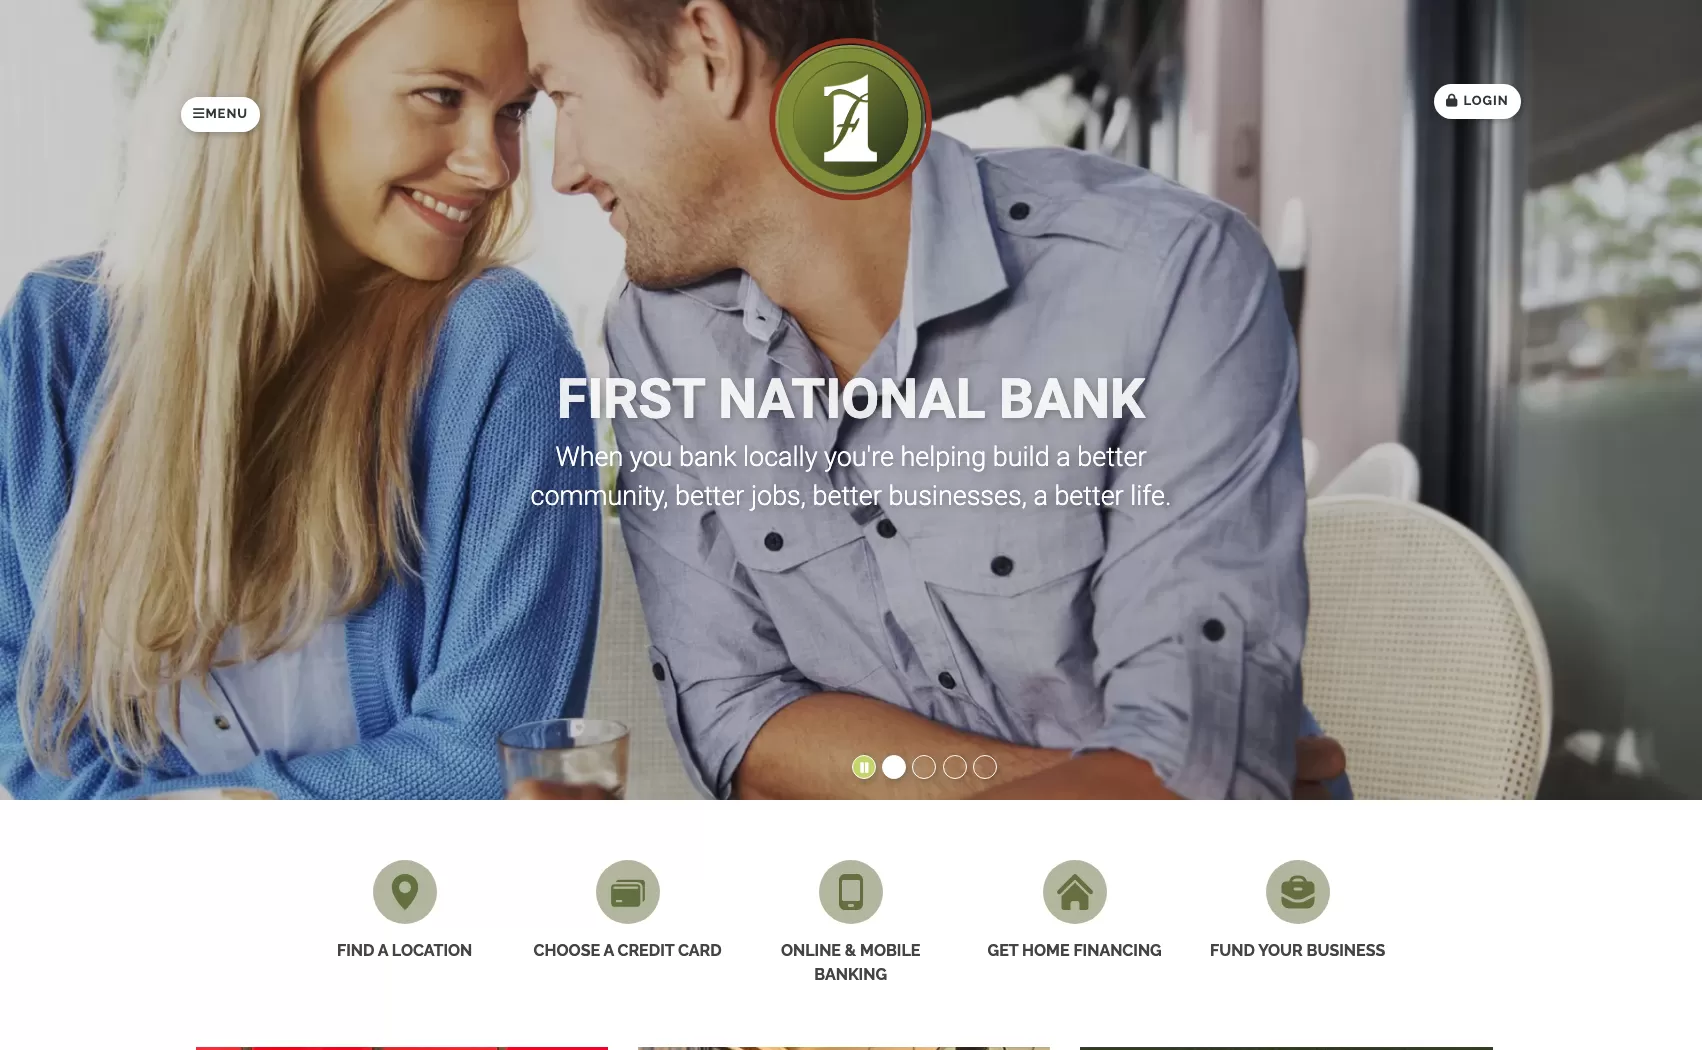 First National Bank | Financial, High Security Website Design and Website Development